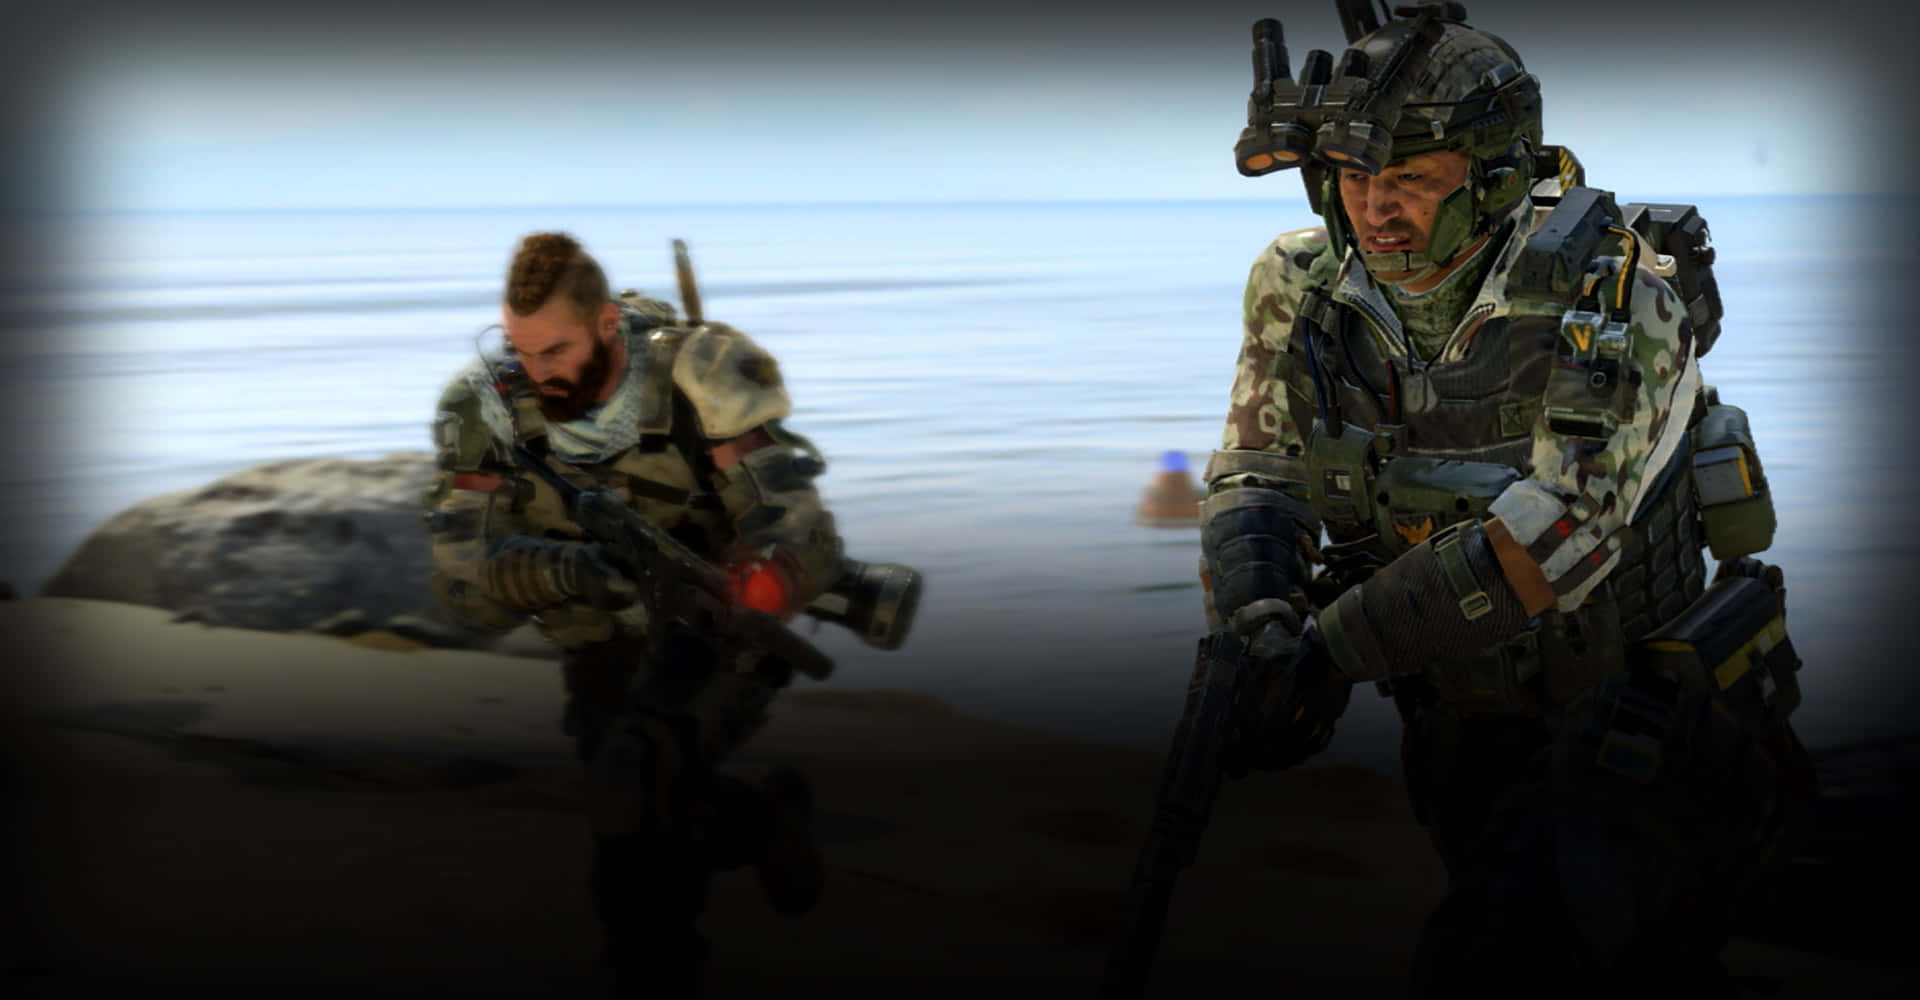 Zweisoldaten Laufen Am Strand Entlang. Wallpaper